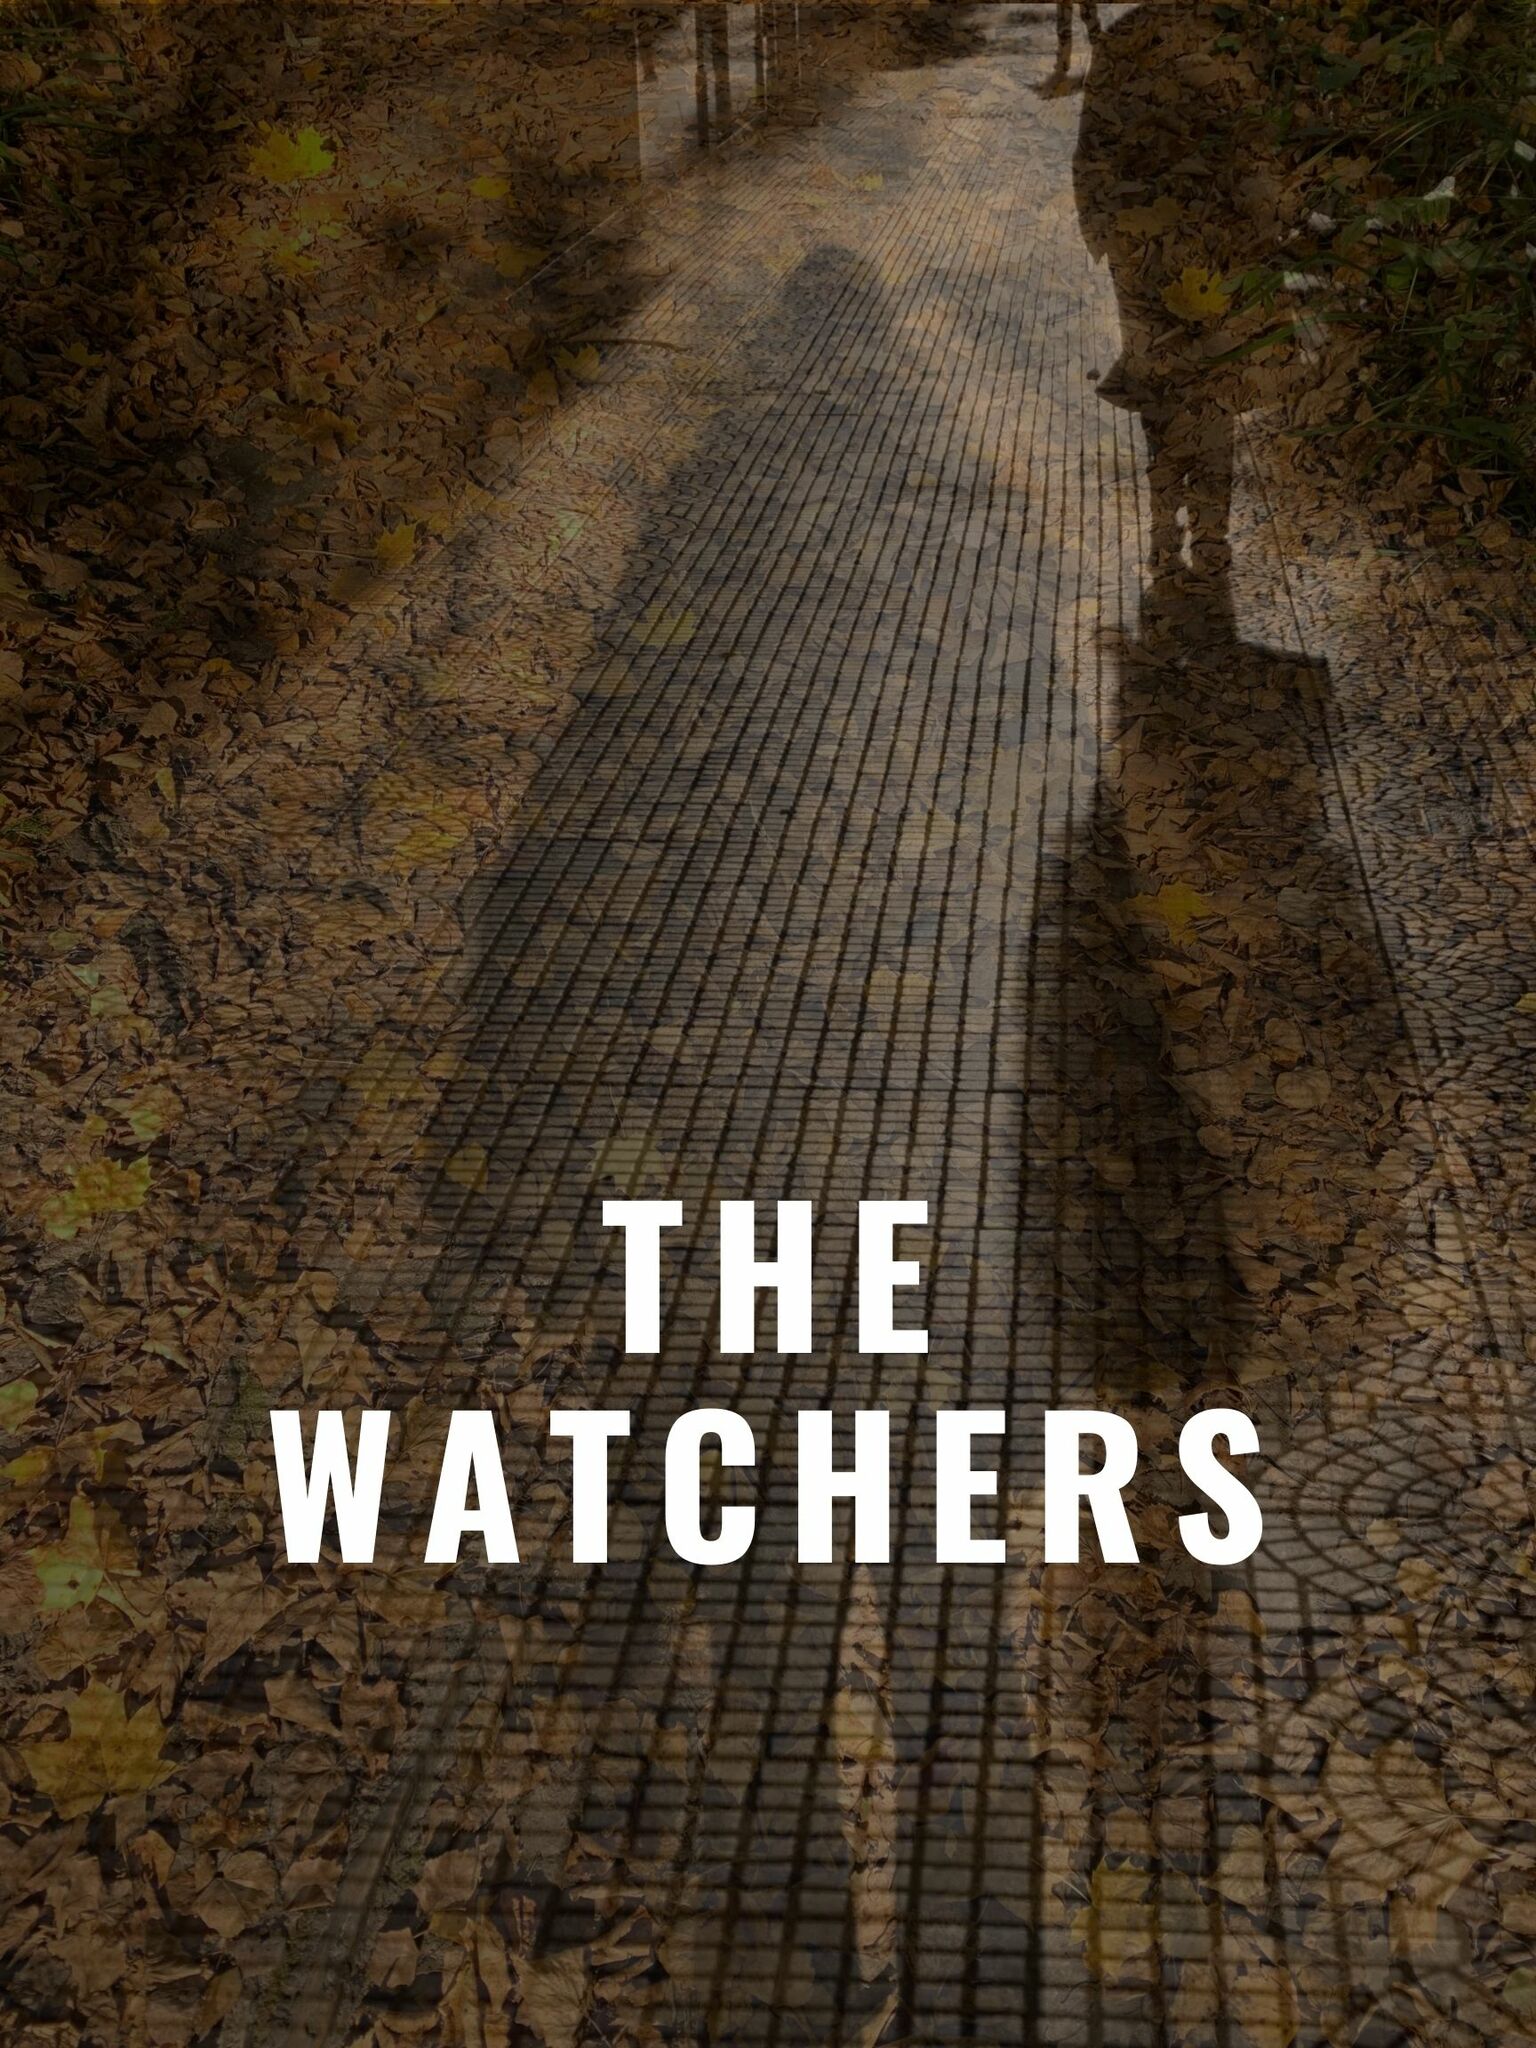 THE WATCHERS